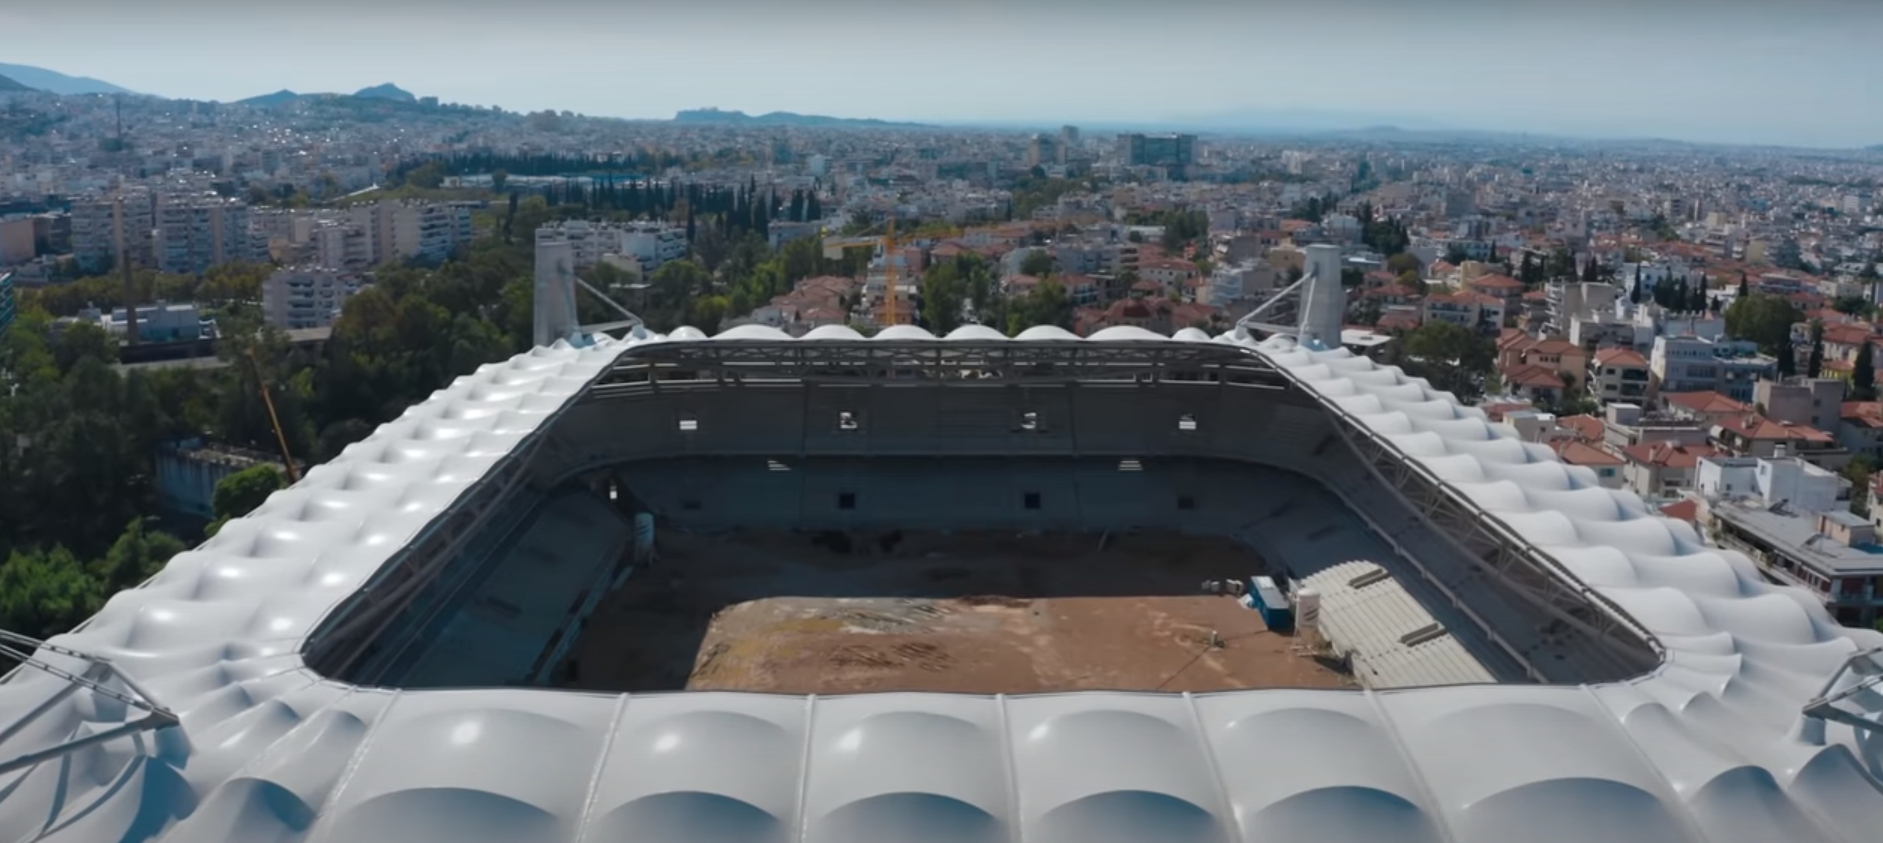 More information about "OPAP Arena: Η εξέλιξη της κατασκευής του νέου γηπέδου της ΑΕΚ"